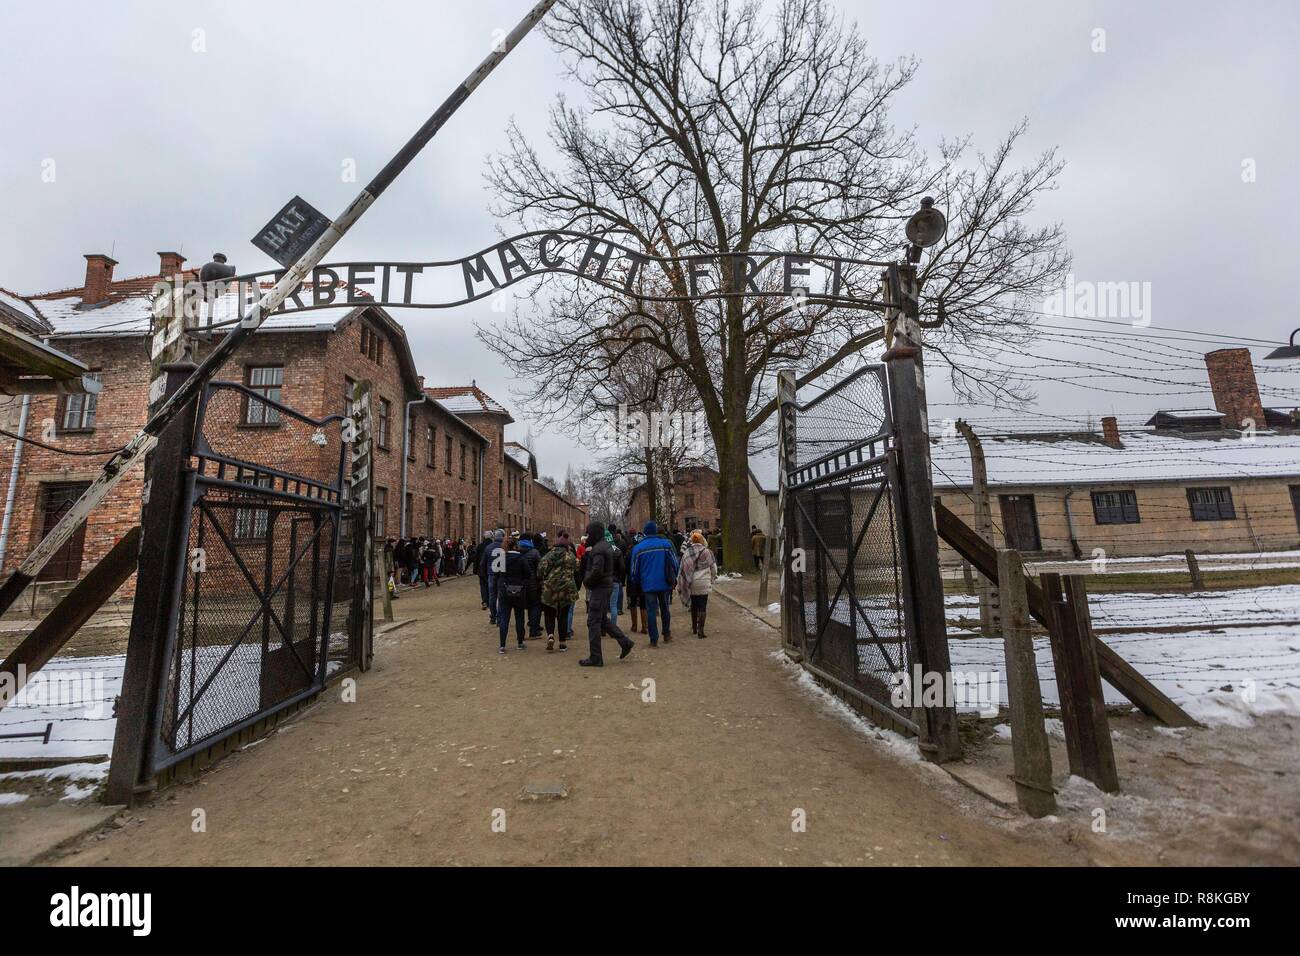 Poland, Auschwitz, Birkenau, Nazi German concentration and extermination camp (1940-1945), camp entrance with inscription Arbeit macht frei, work makes free Stock Photo